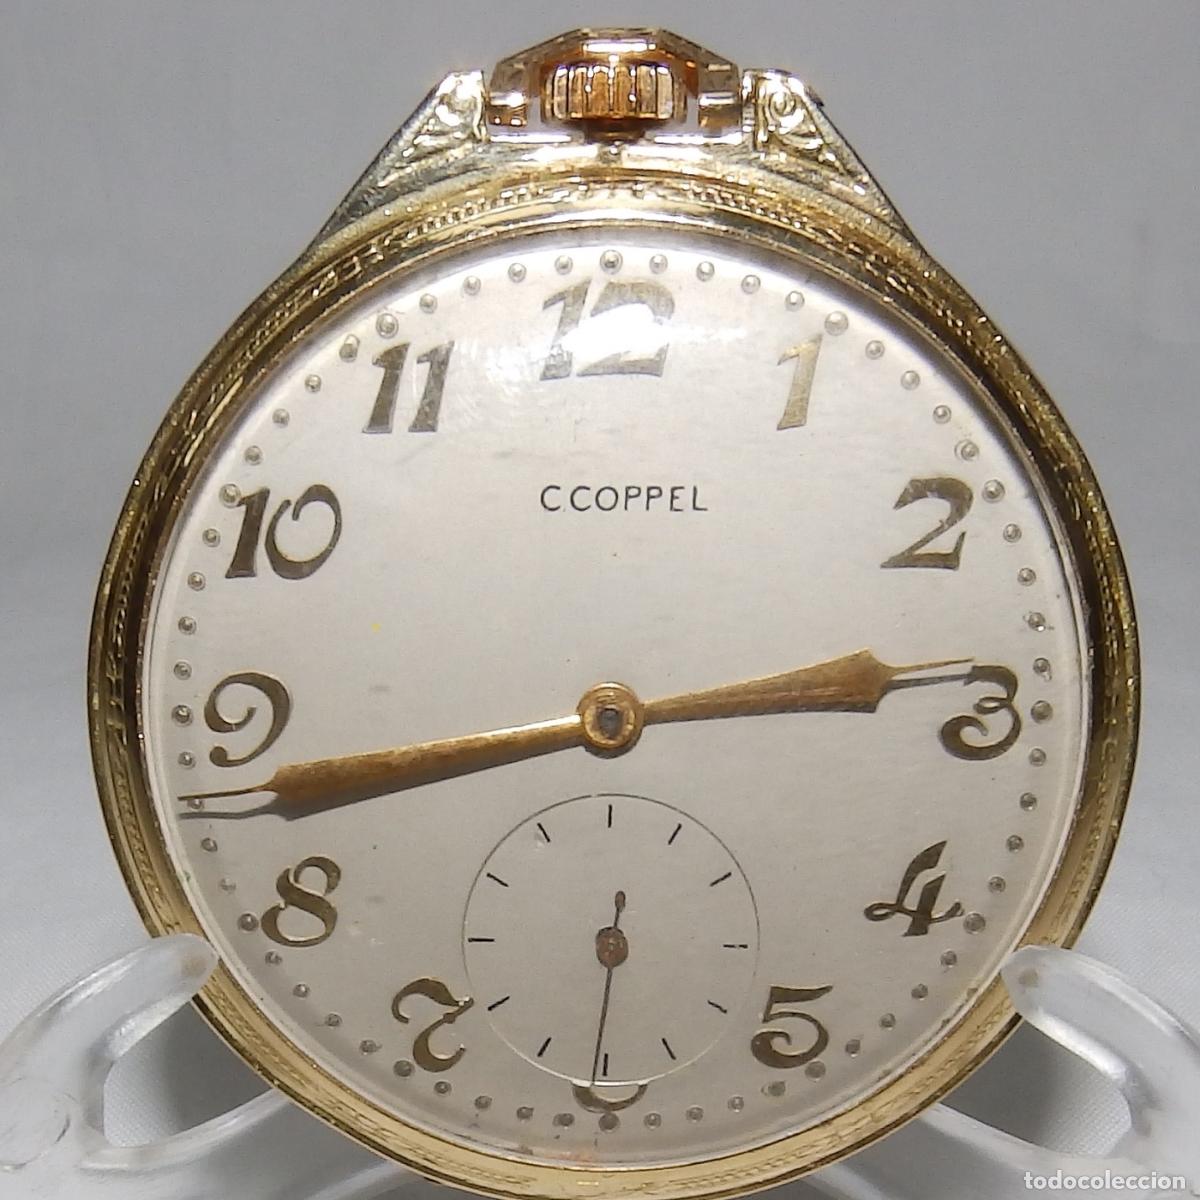 duncan watch co. para c. coppel. reloj de bolsi - Comprar Relógios